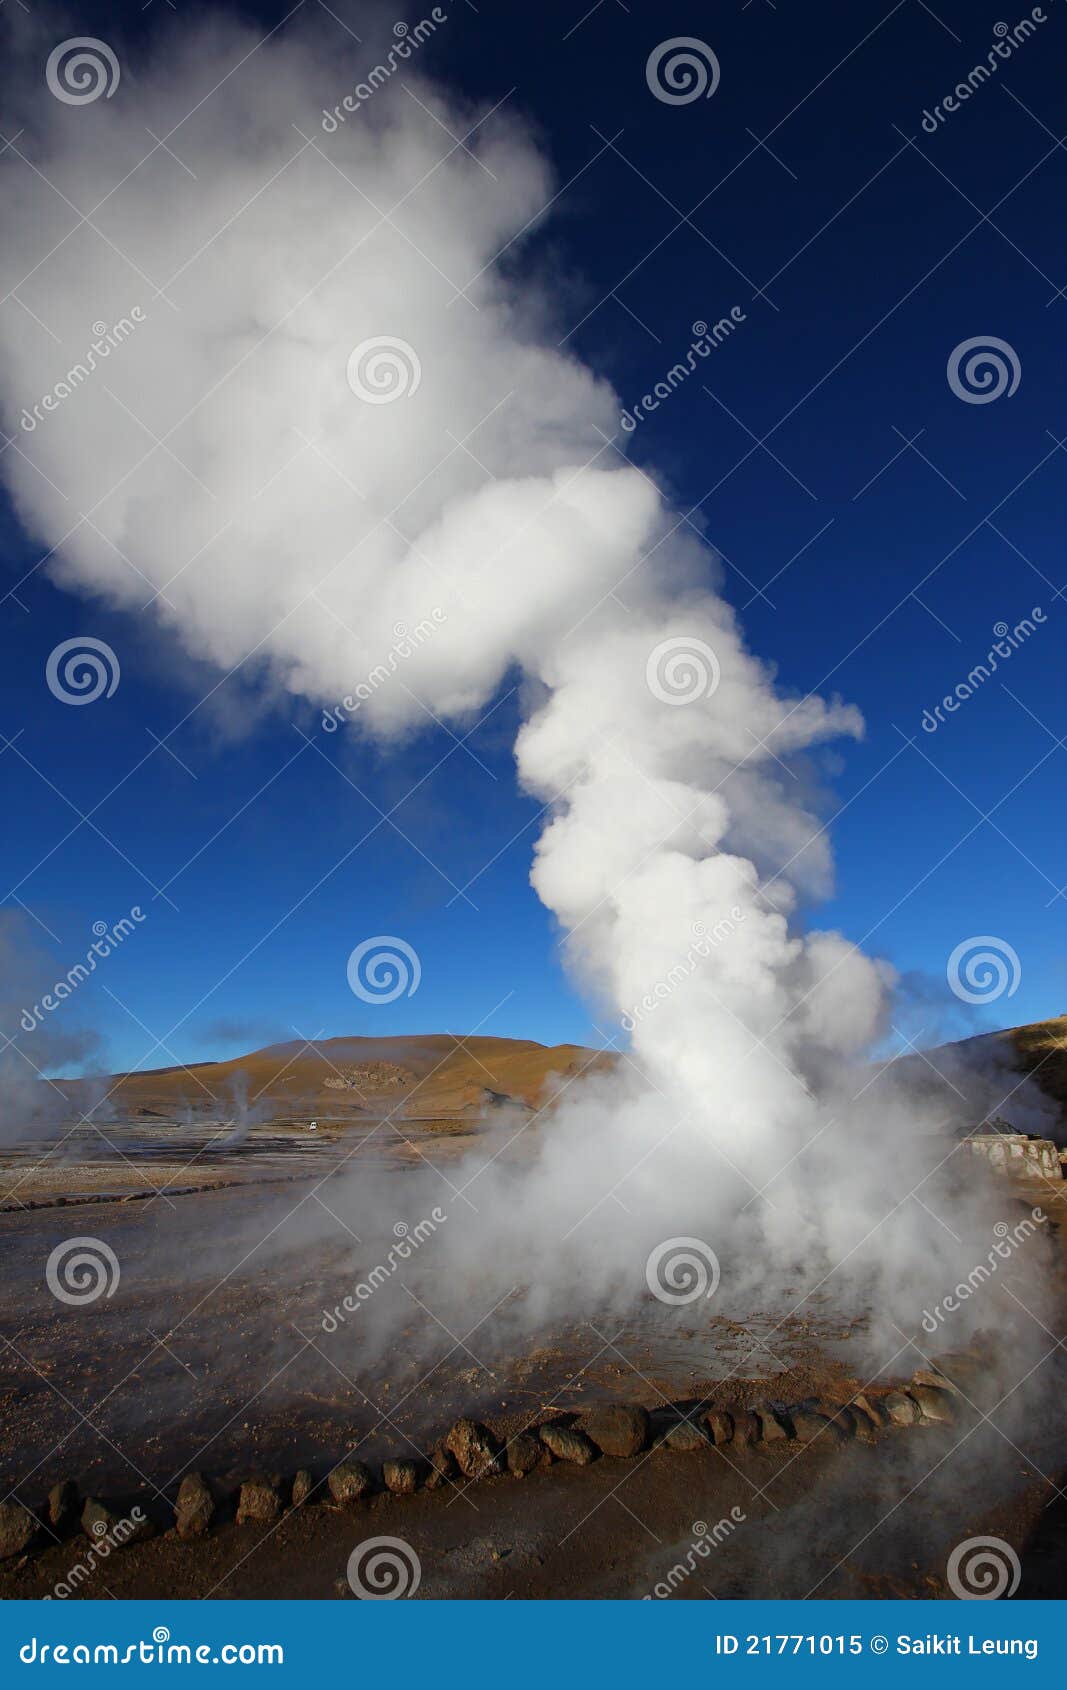 taito geysers